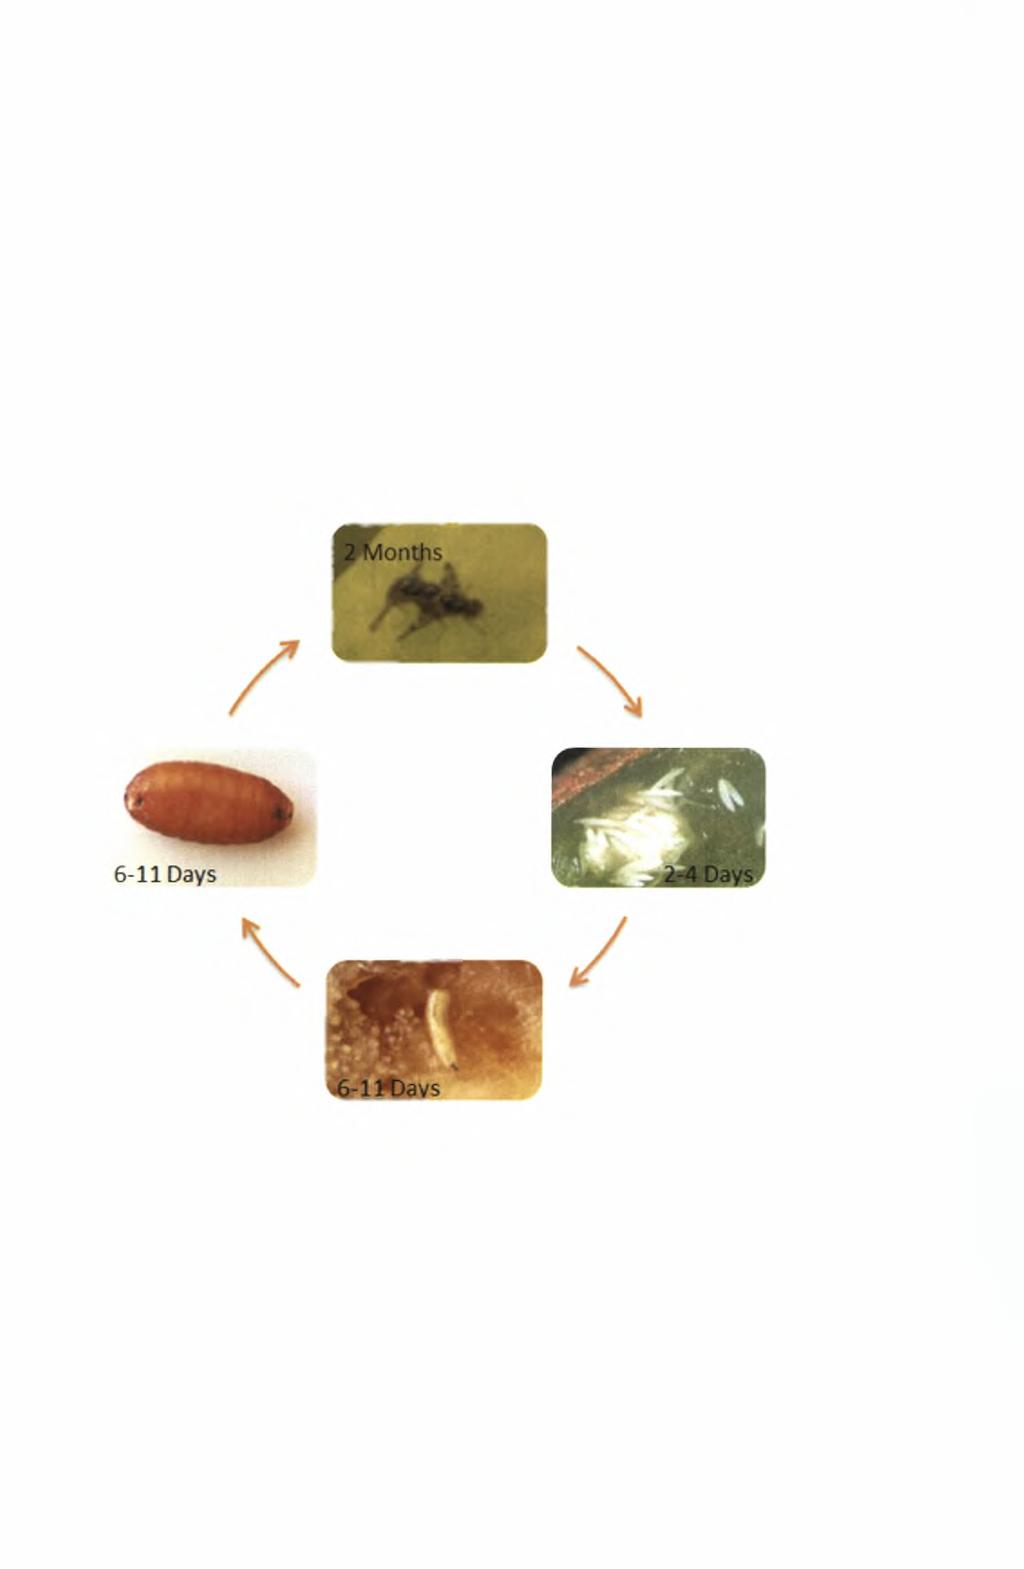 Drosophila spp. Carpophilus spp. Επίσης, οι προσβεβλημένοι καρποί είναι ακατάλληλοι για κατανάλωση.